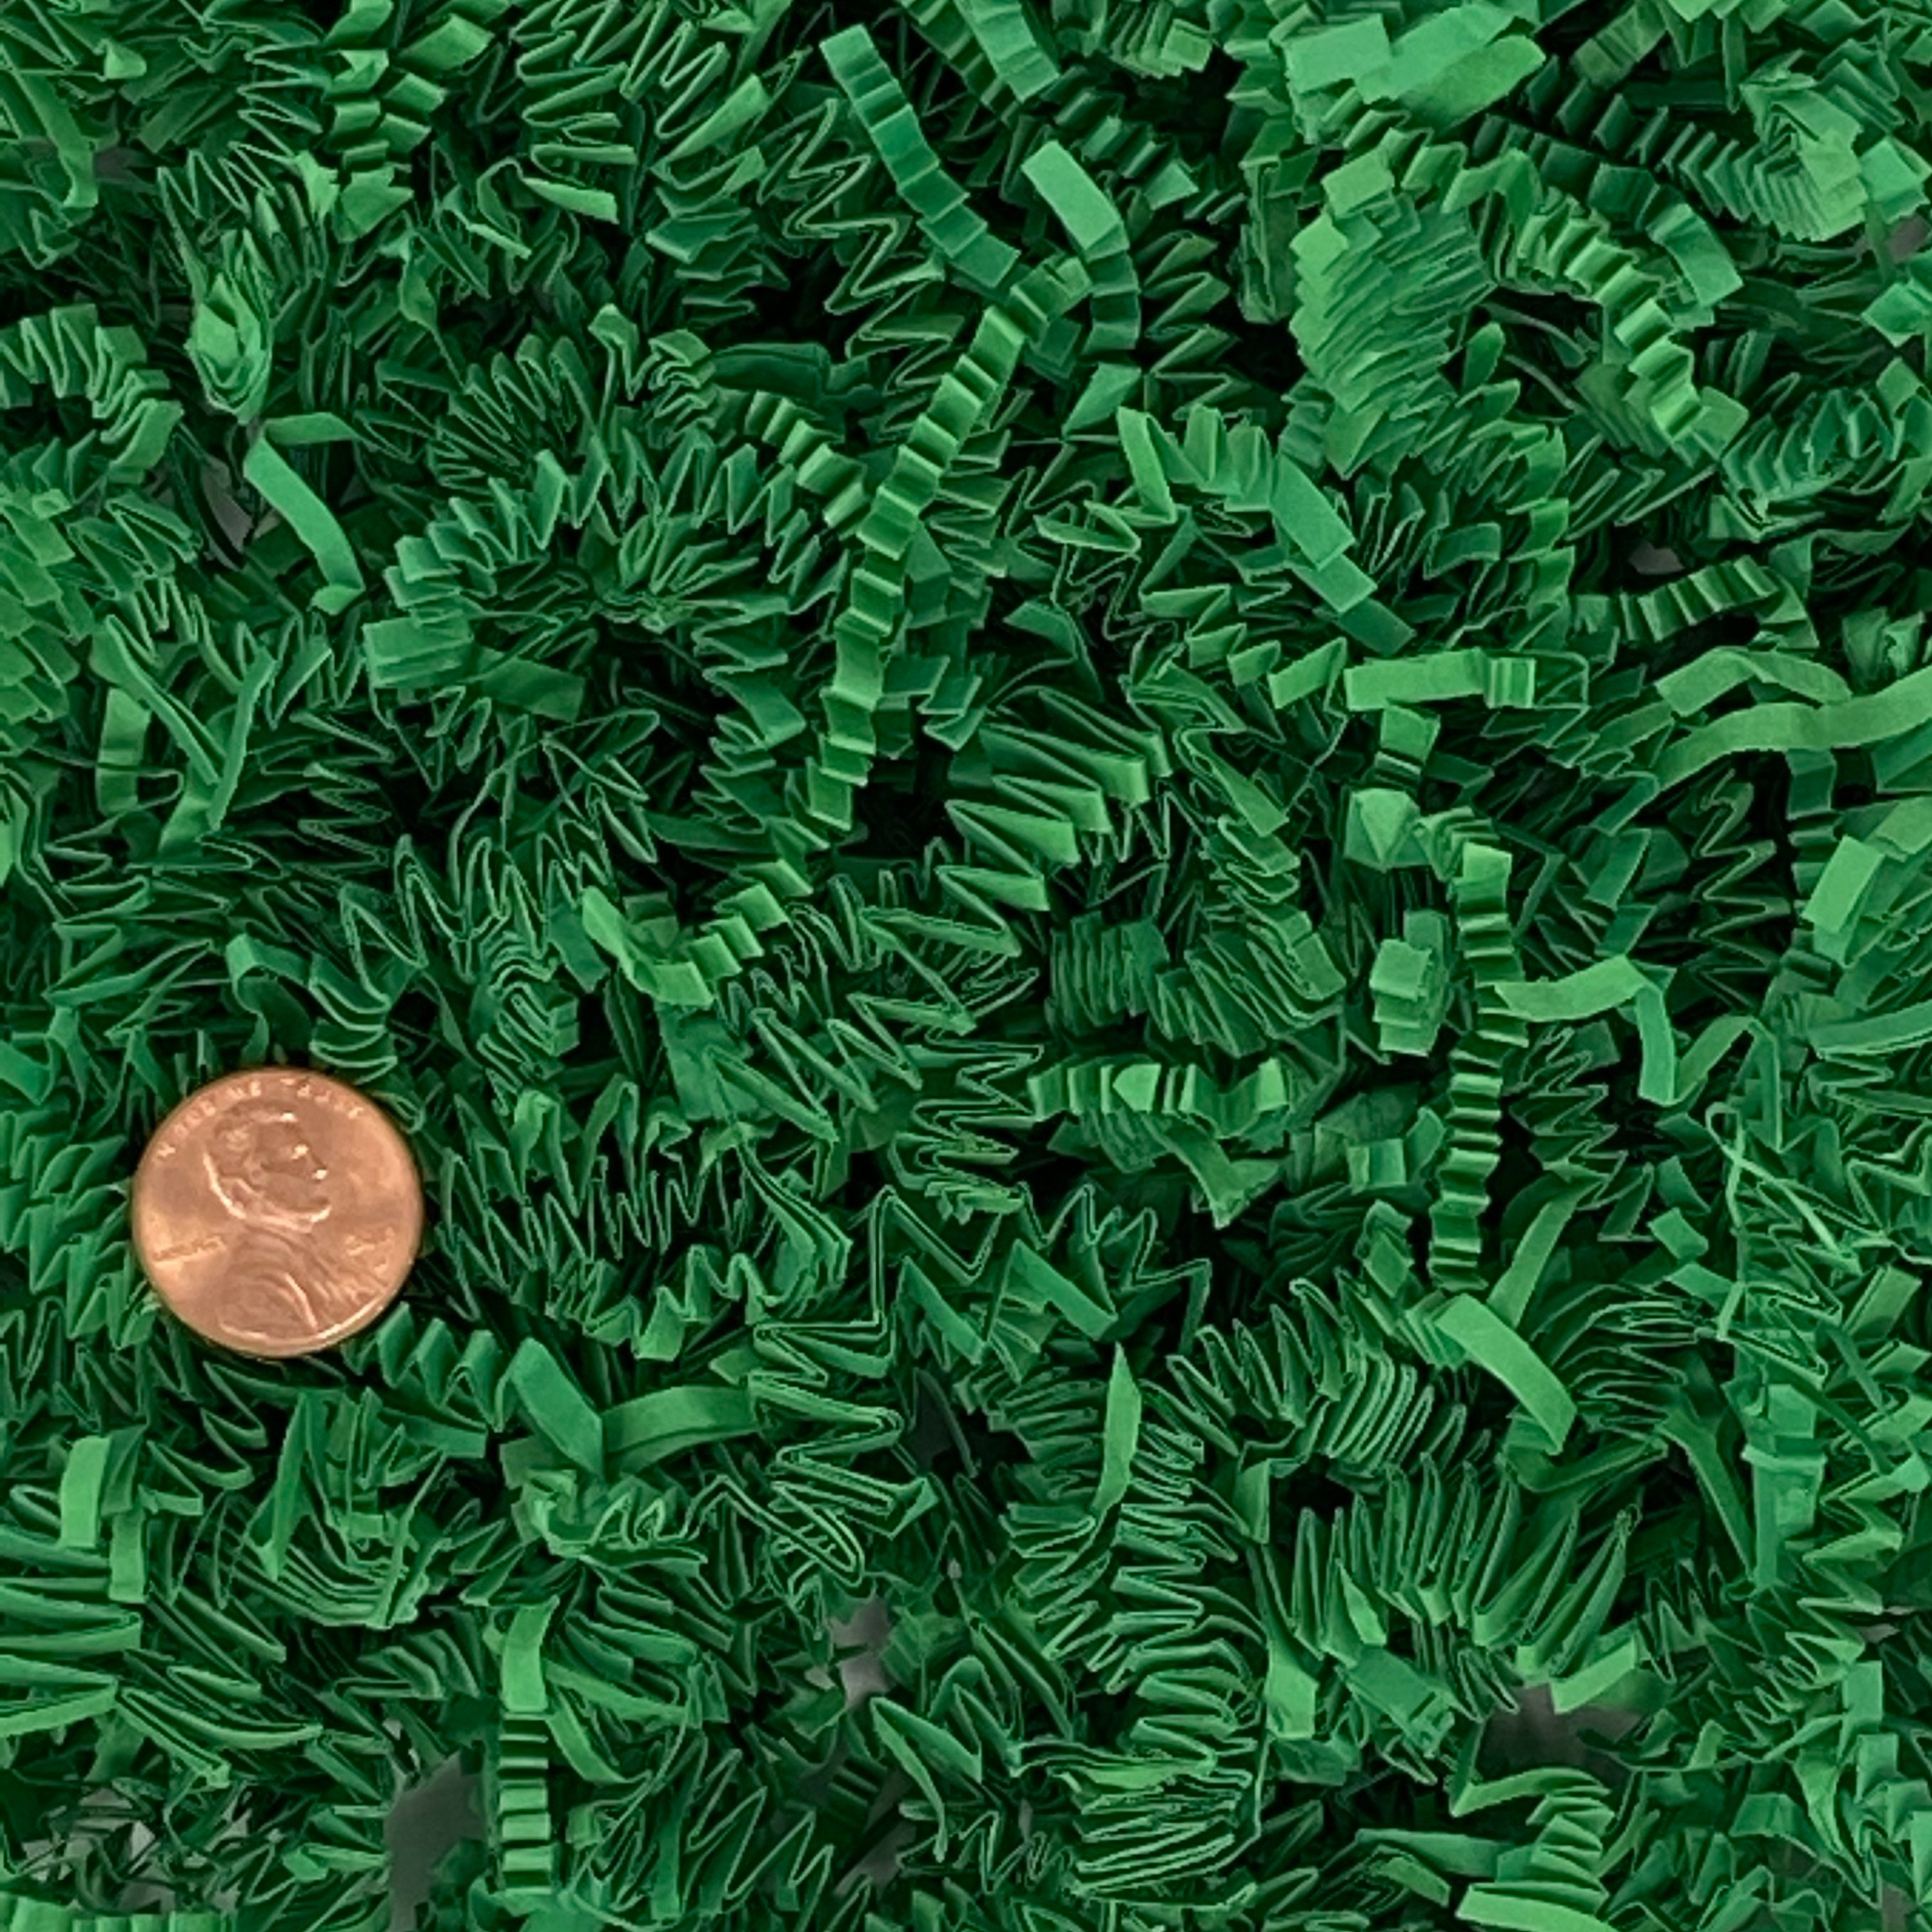 Holiday Home® Mixed Easter Basket Grass Fill - Dark Green/Gold, 1.25 oz -  Kroger